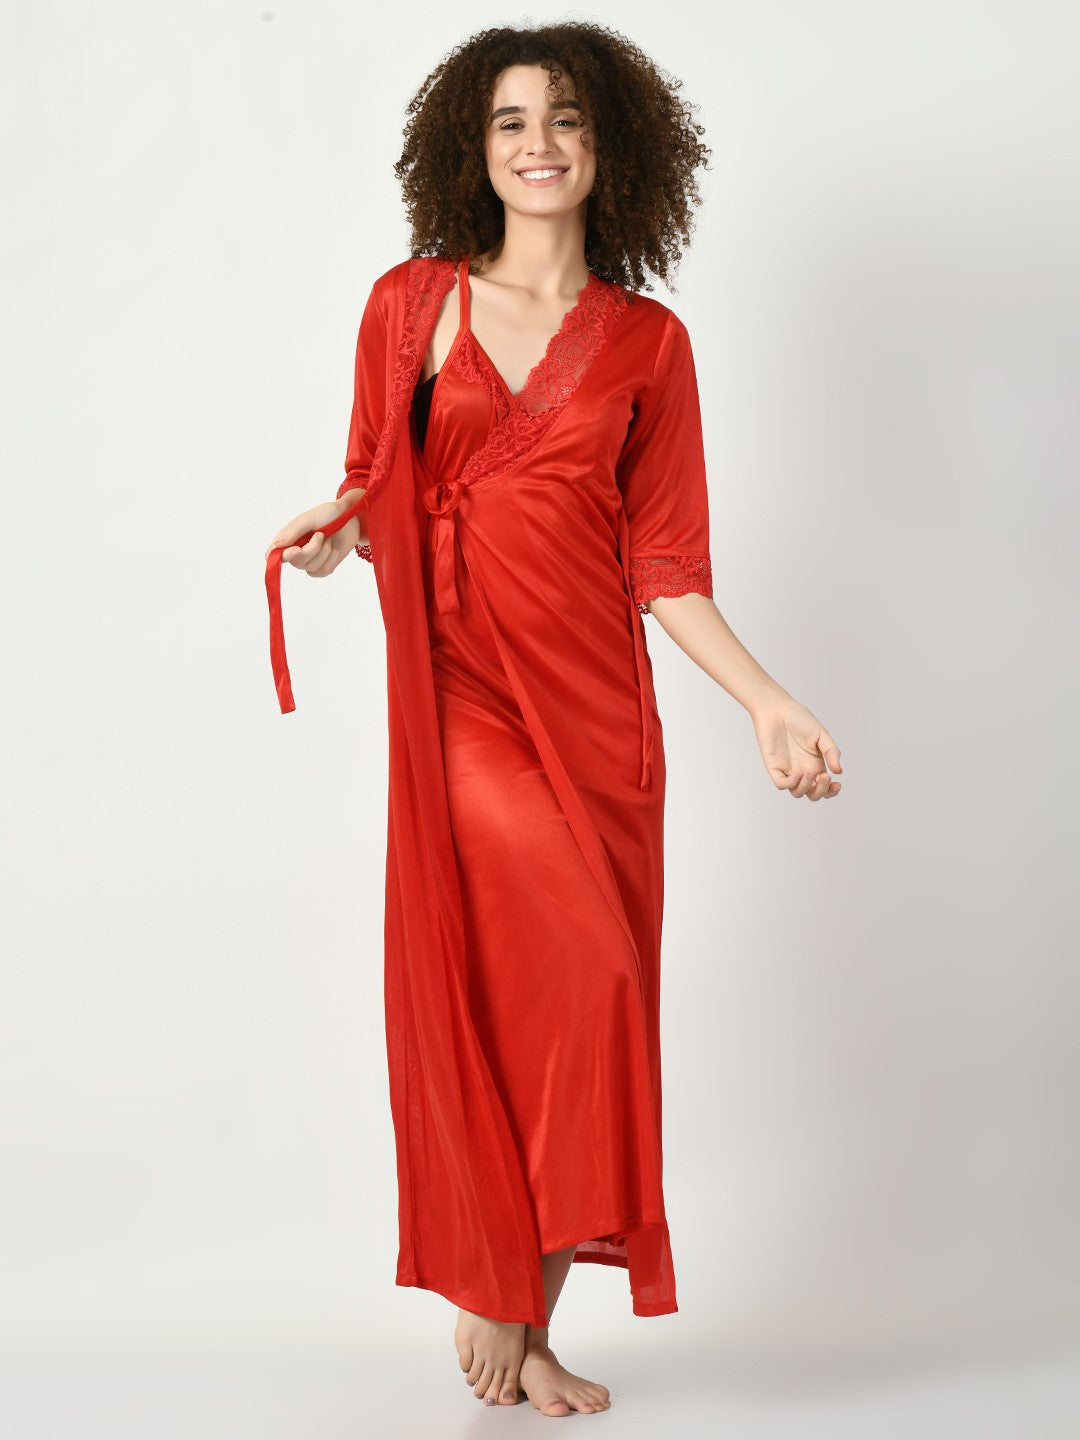 Women's Satin Red Nightdress - Legit Affair